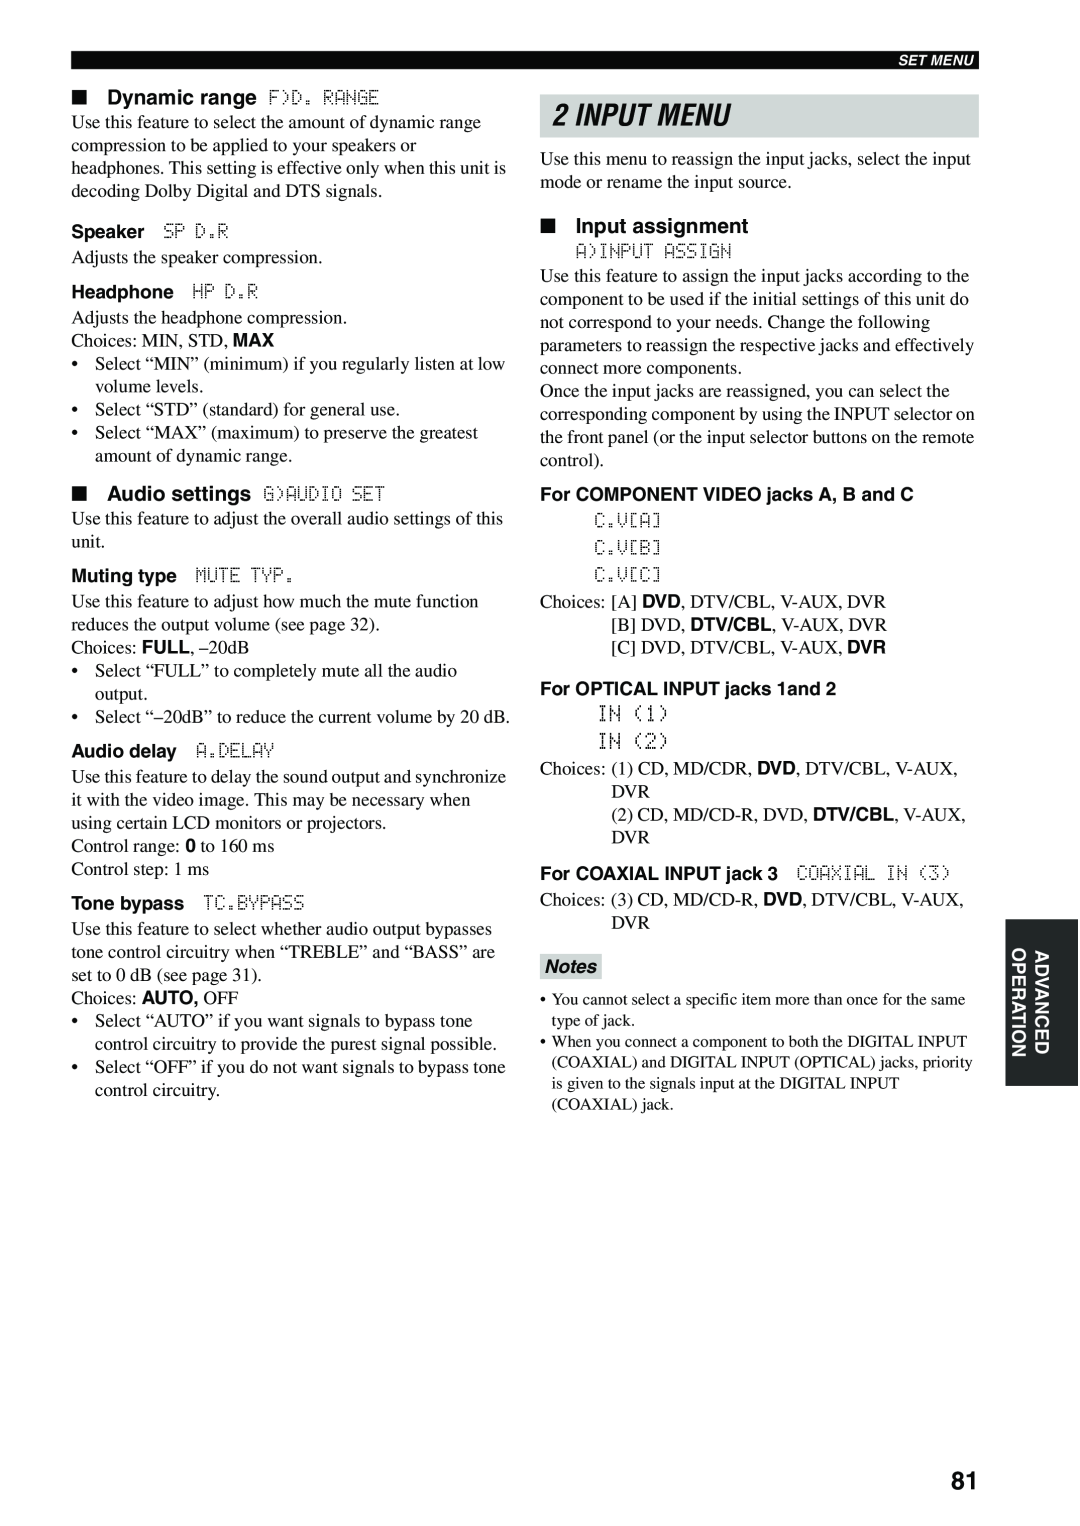 Yamaha HTR-5940 owner manual Input Menu, Dynamic range FD. RANGE, Audio settings GAUDIO SET, Input assignment, In In, Notes 